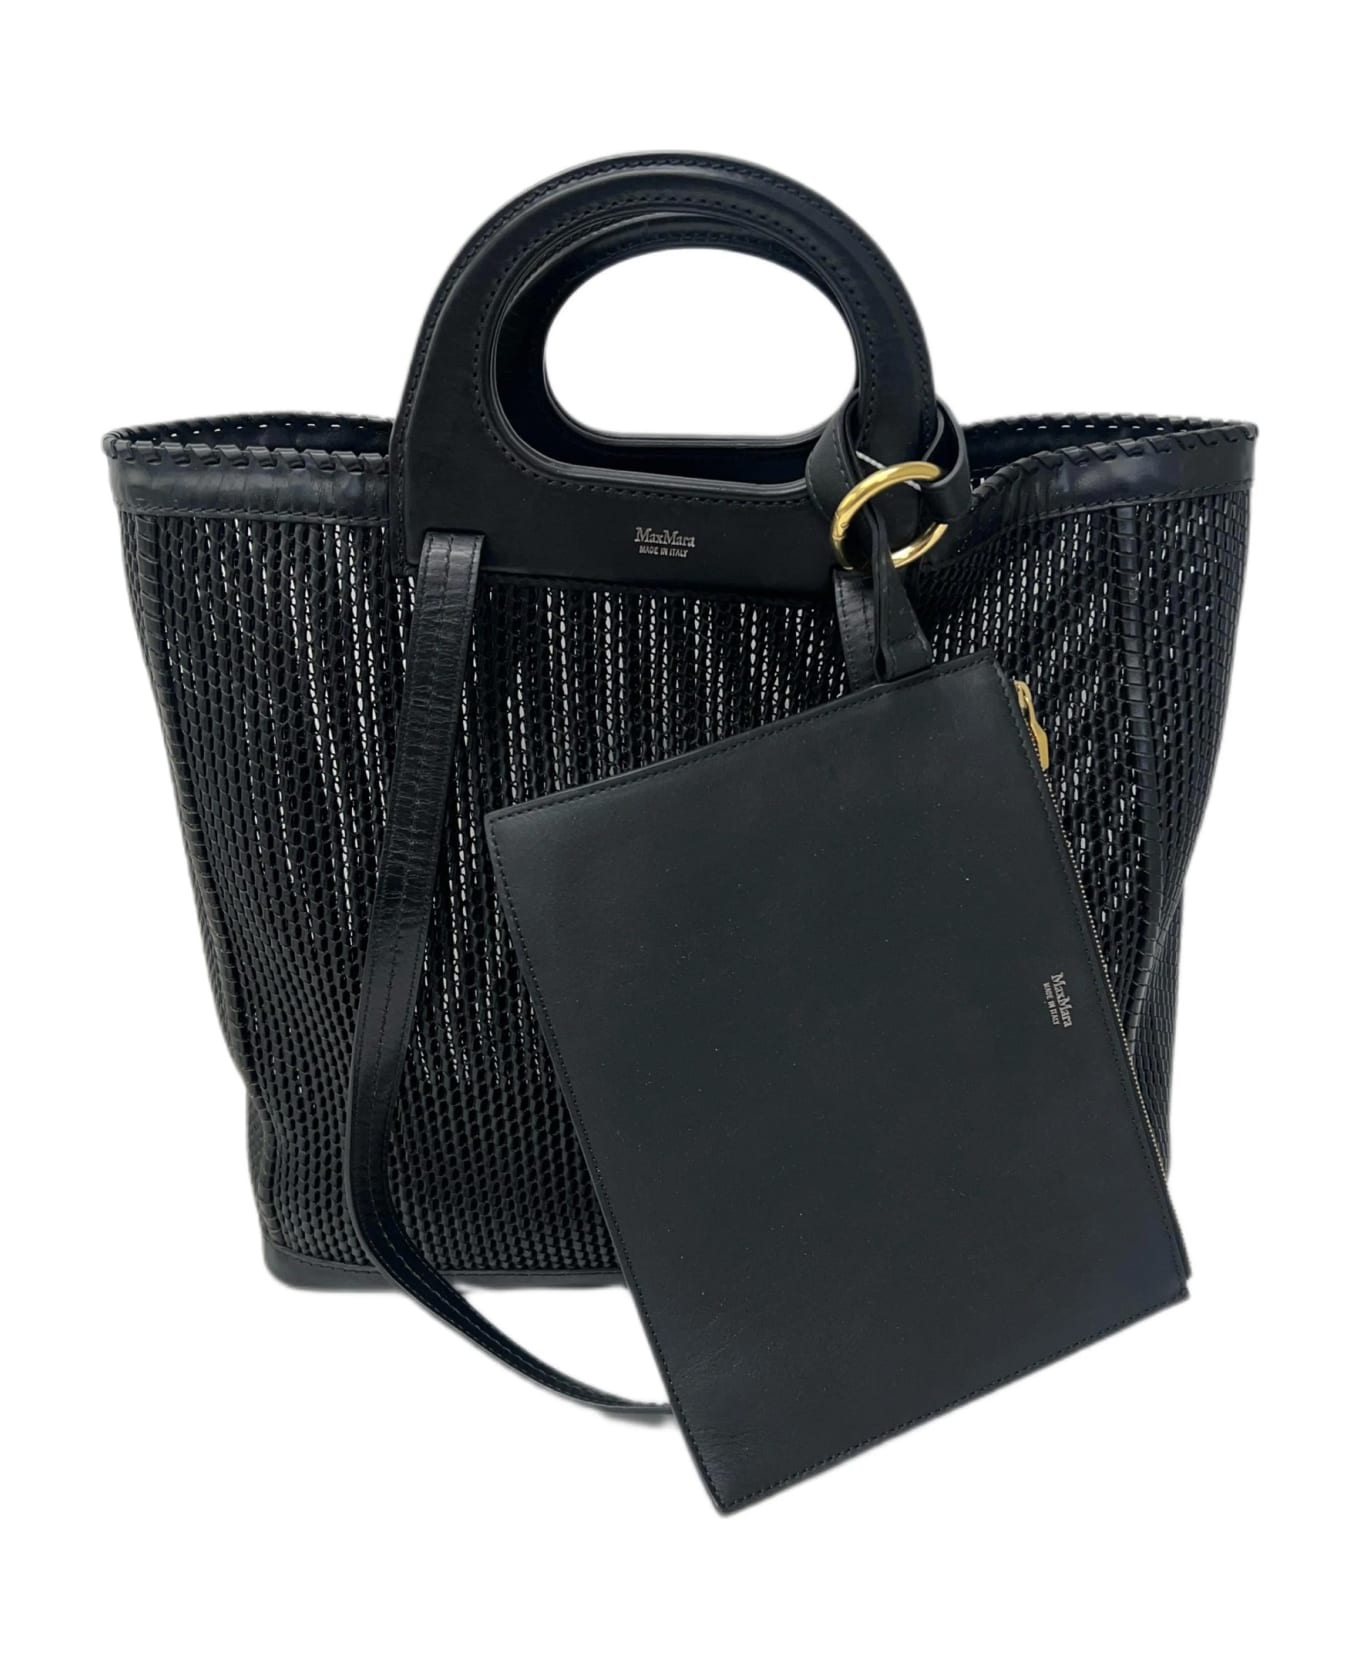 Max Mara Accessori Queen Leather Bag - Black